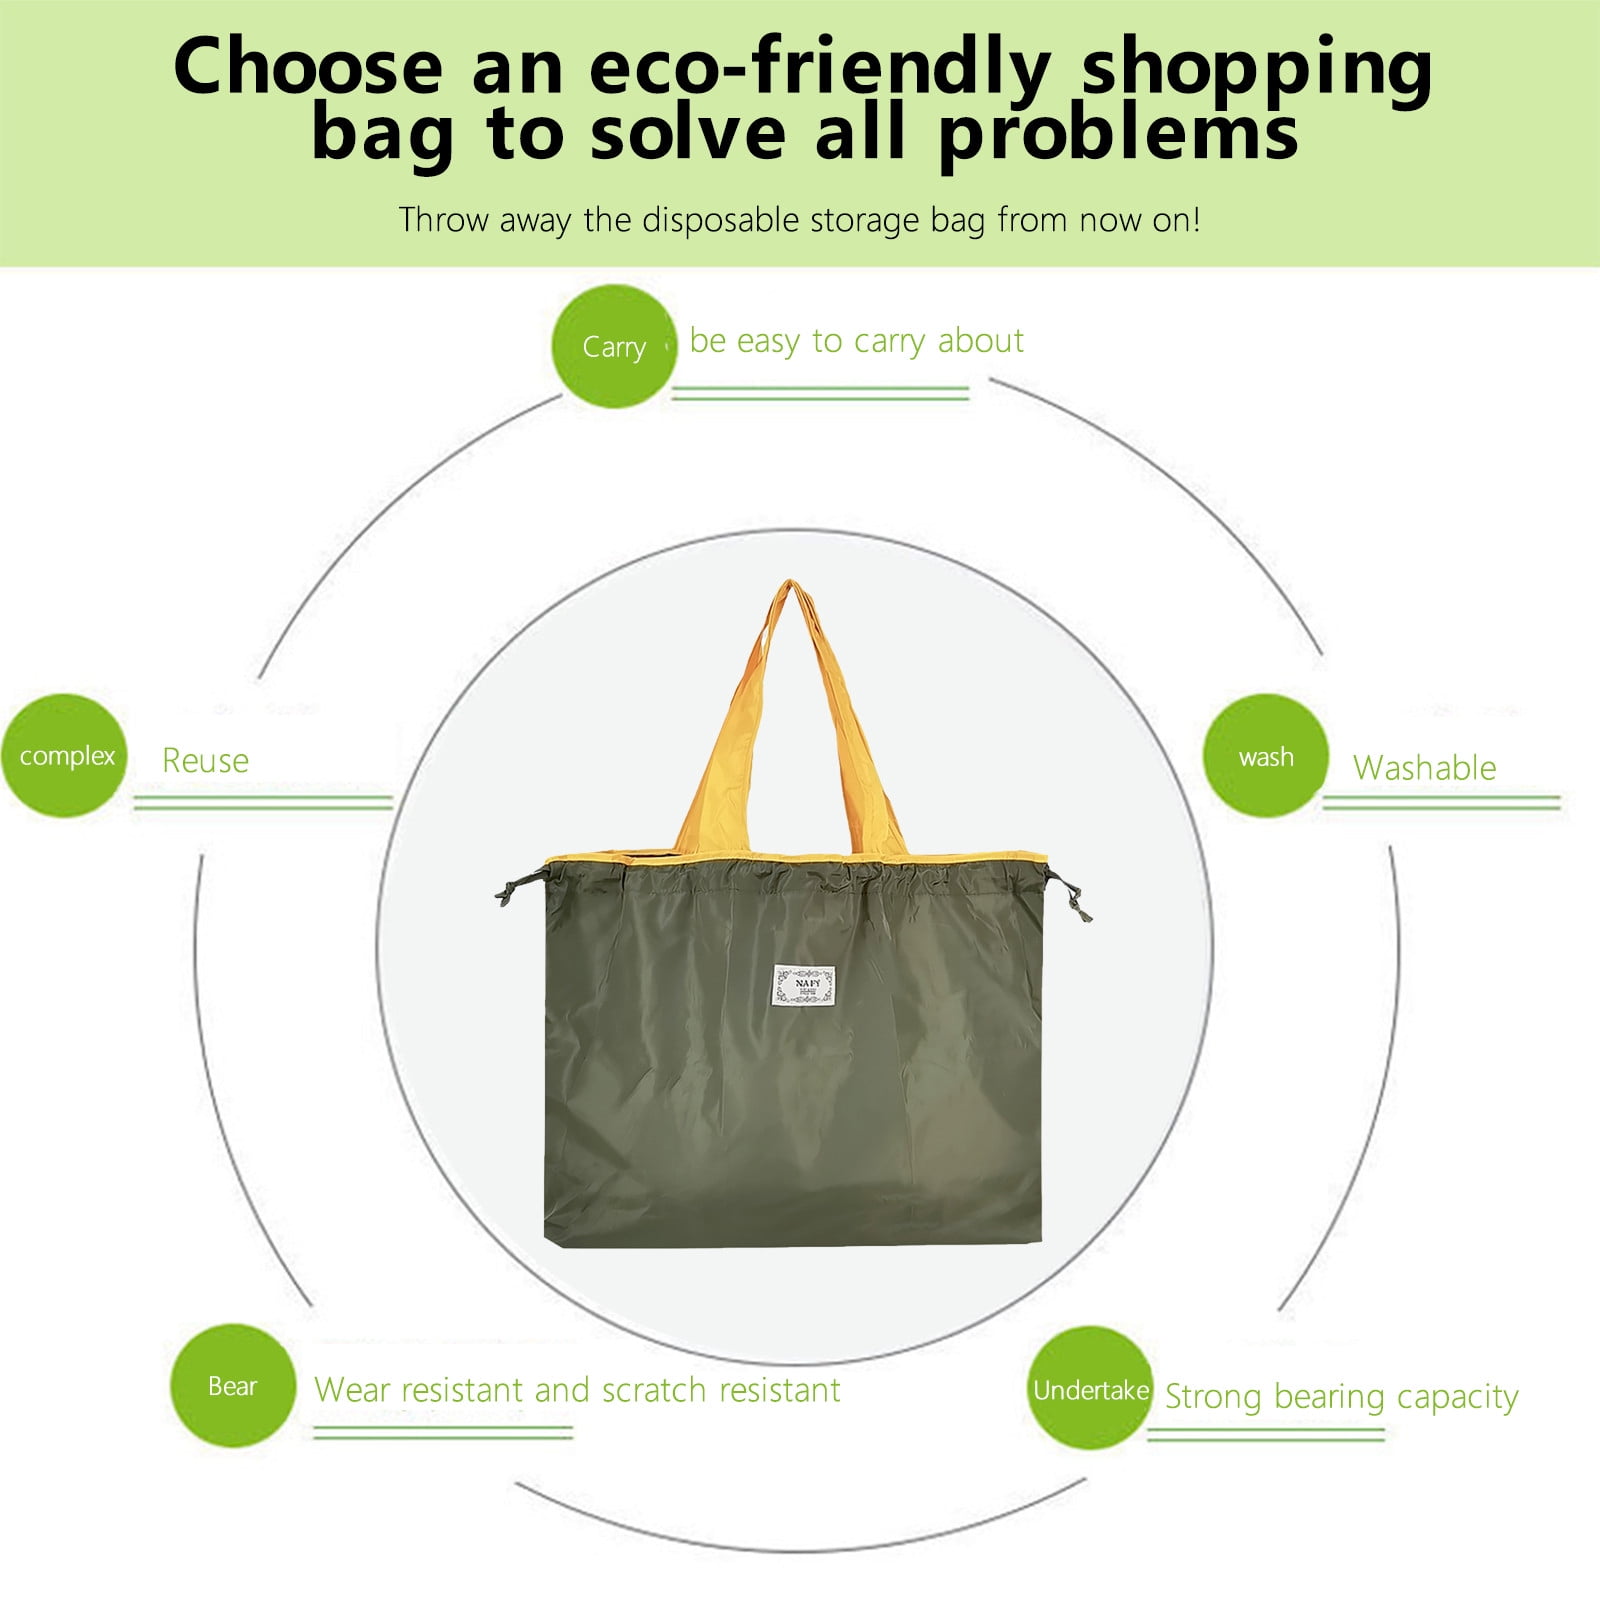 Eco-Friendly Bags: Why Choose Zatchels?